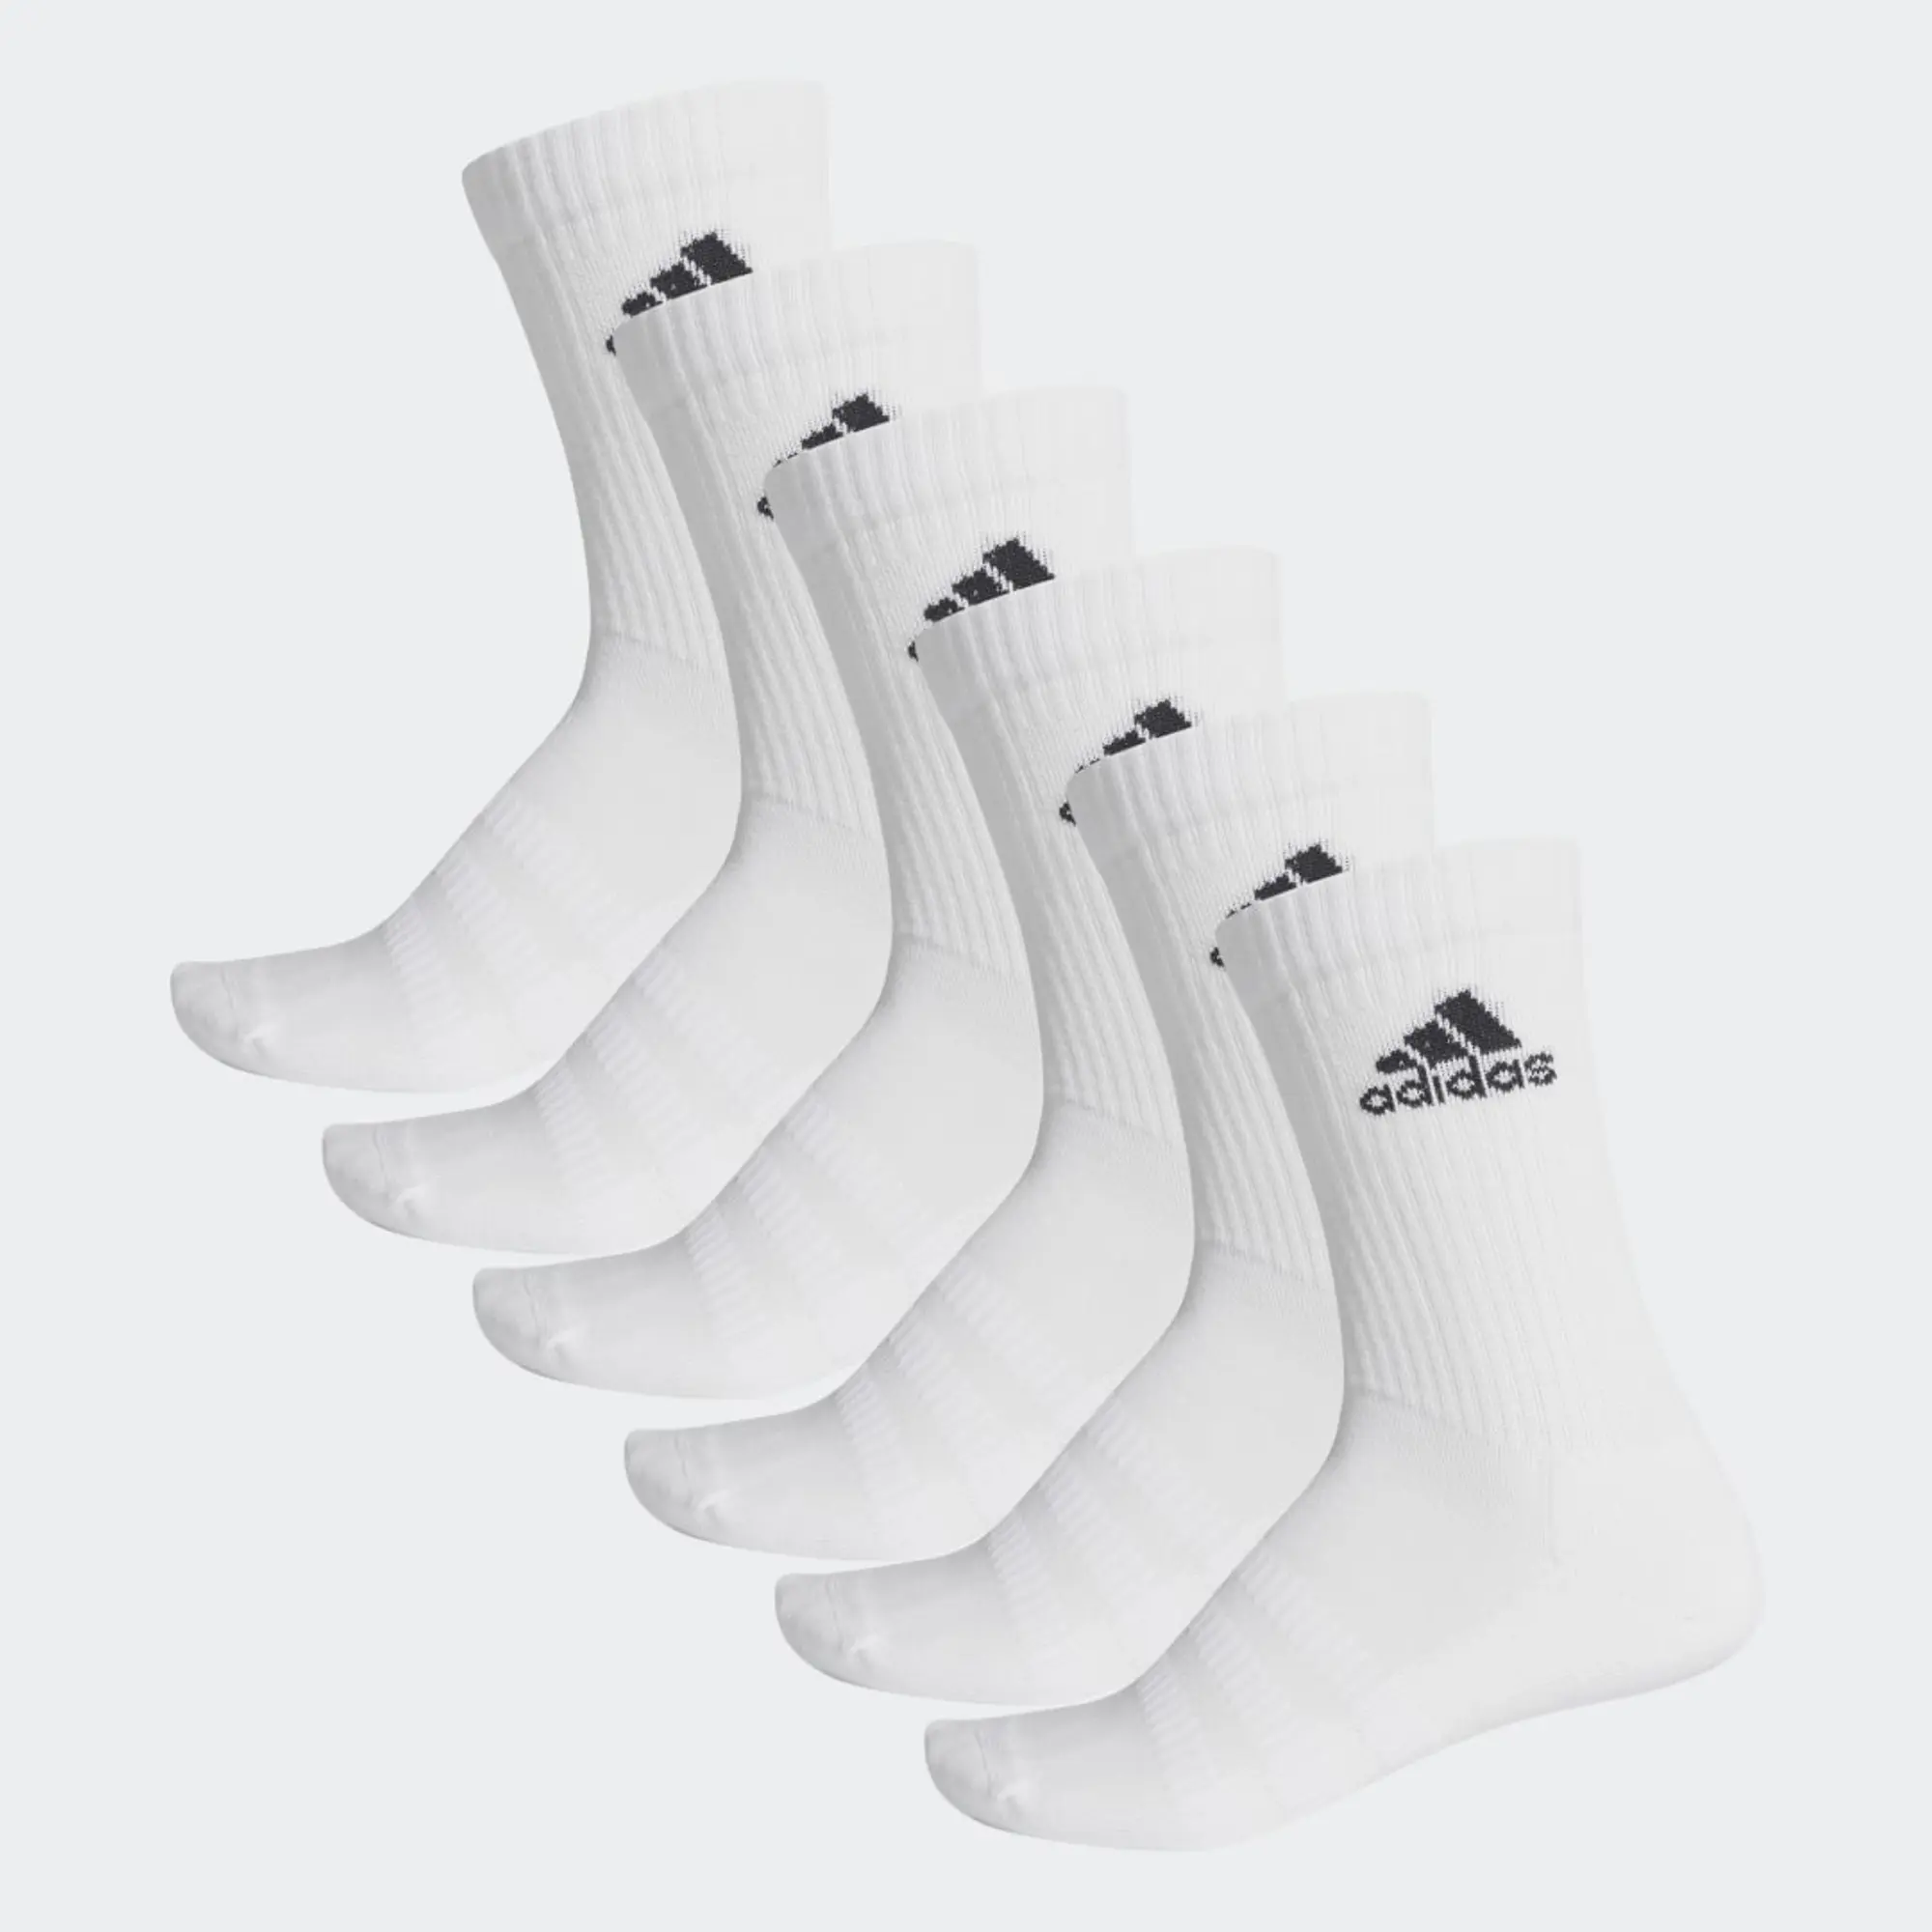 Adidas Socks 6-Pack - White